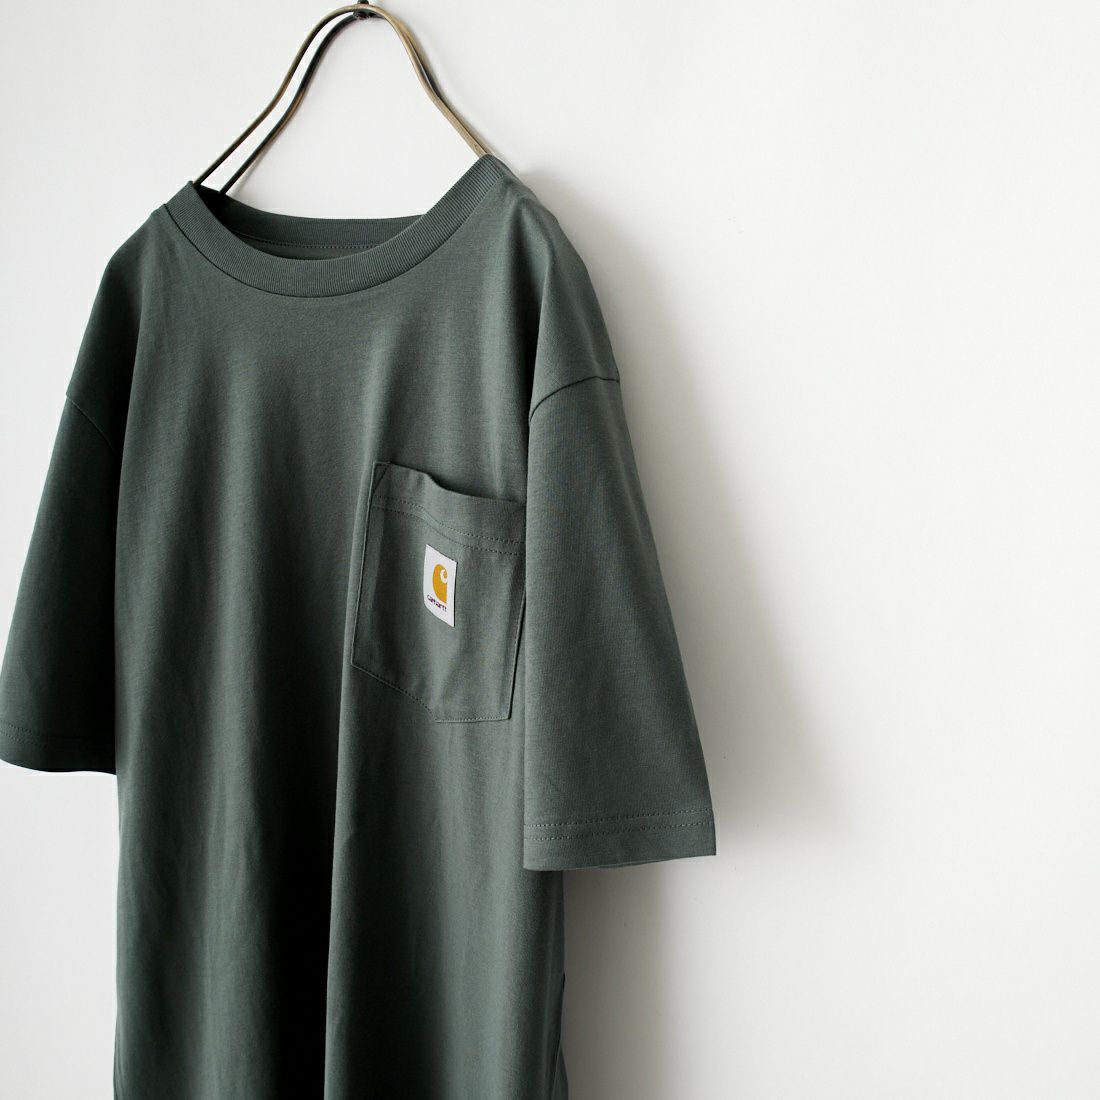 carhartt WIP [カーハートダブリューアイピー] ポケットTシャツ [I022091] 0NVXX HGRN